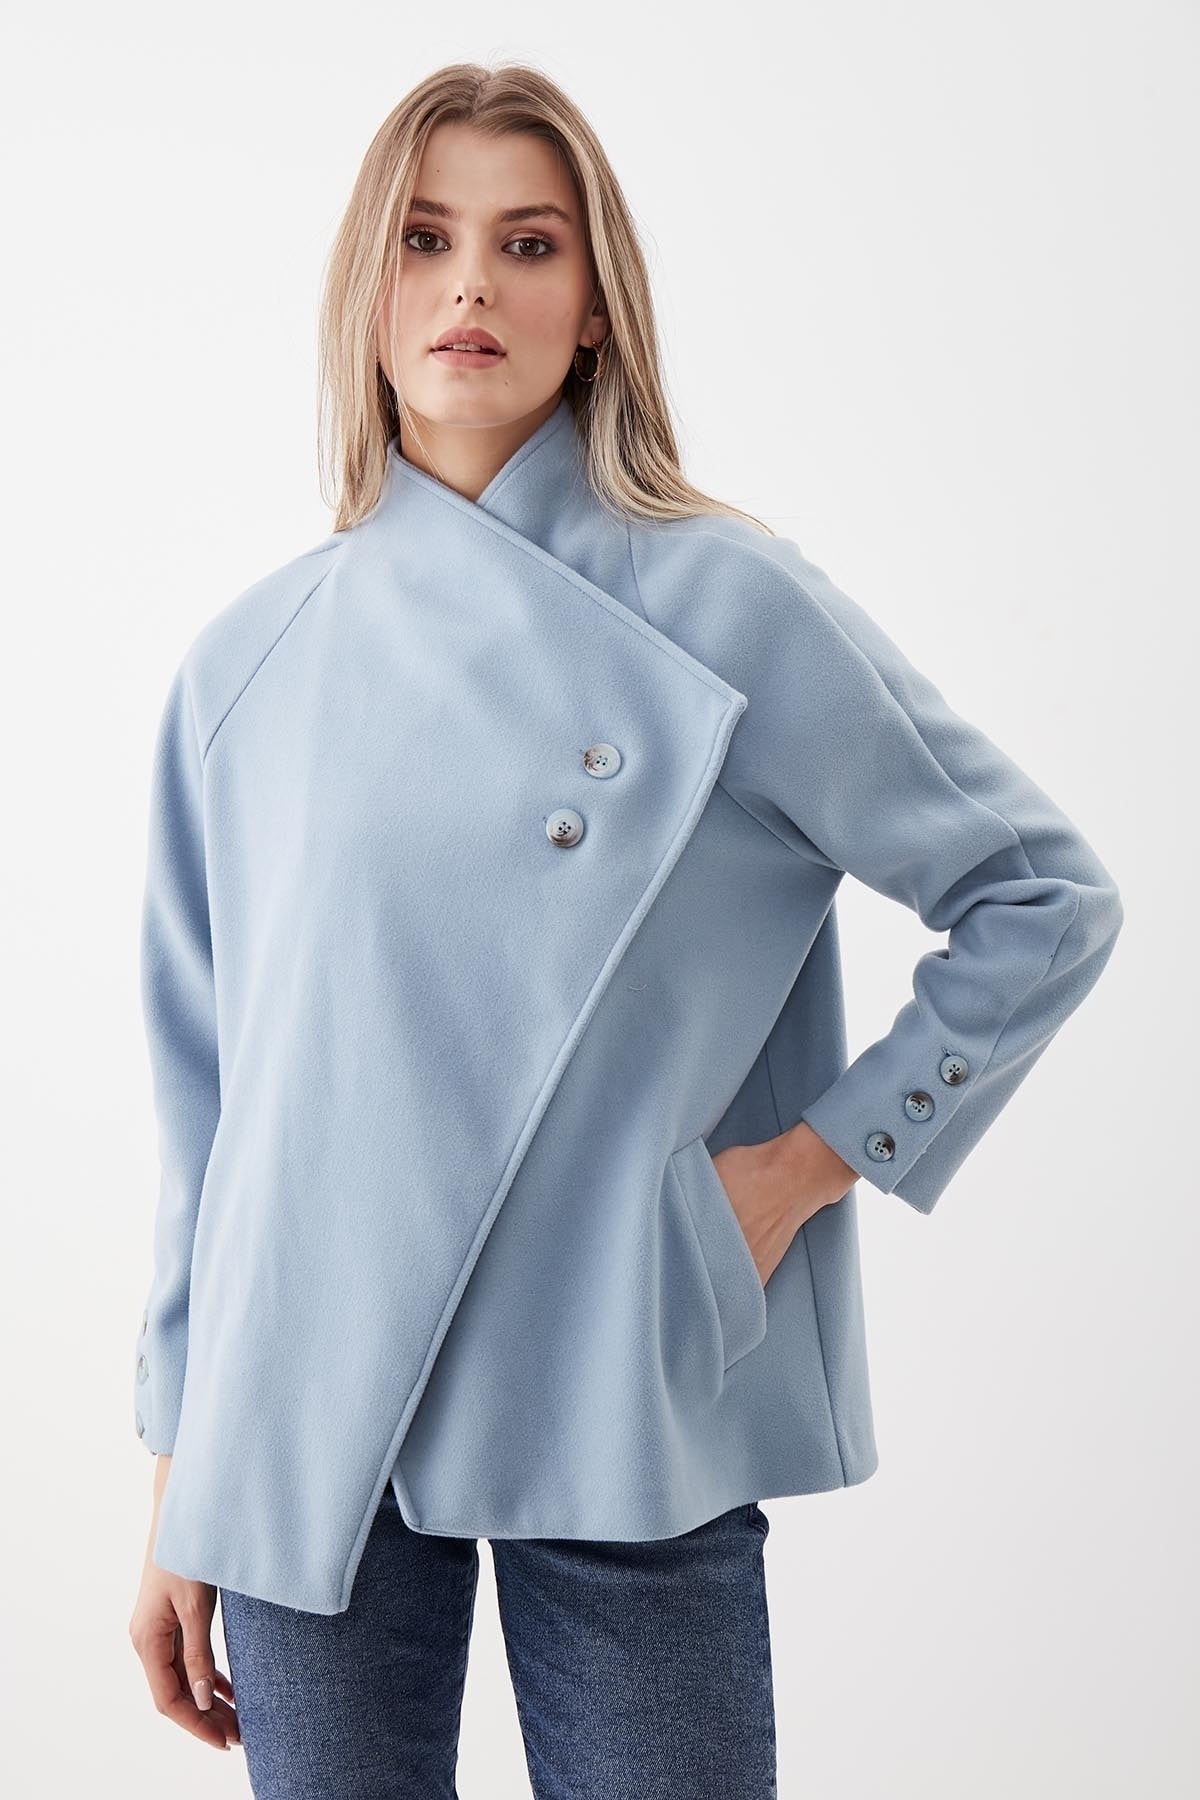 Vitrin Mantel Blau Zweireihig Fast ausverkauft SF7395